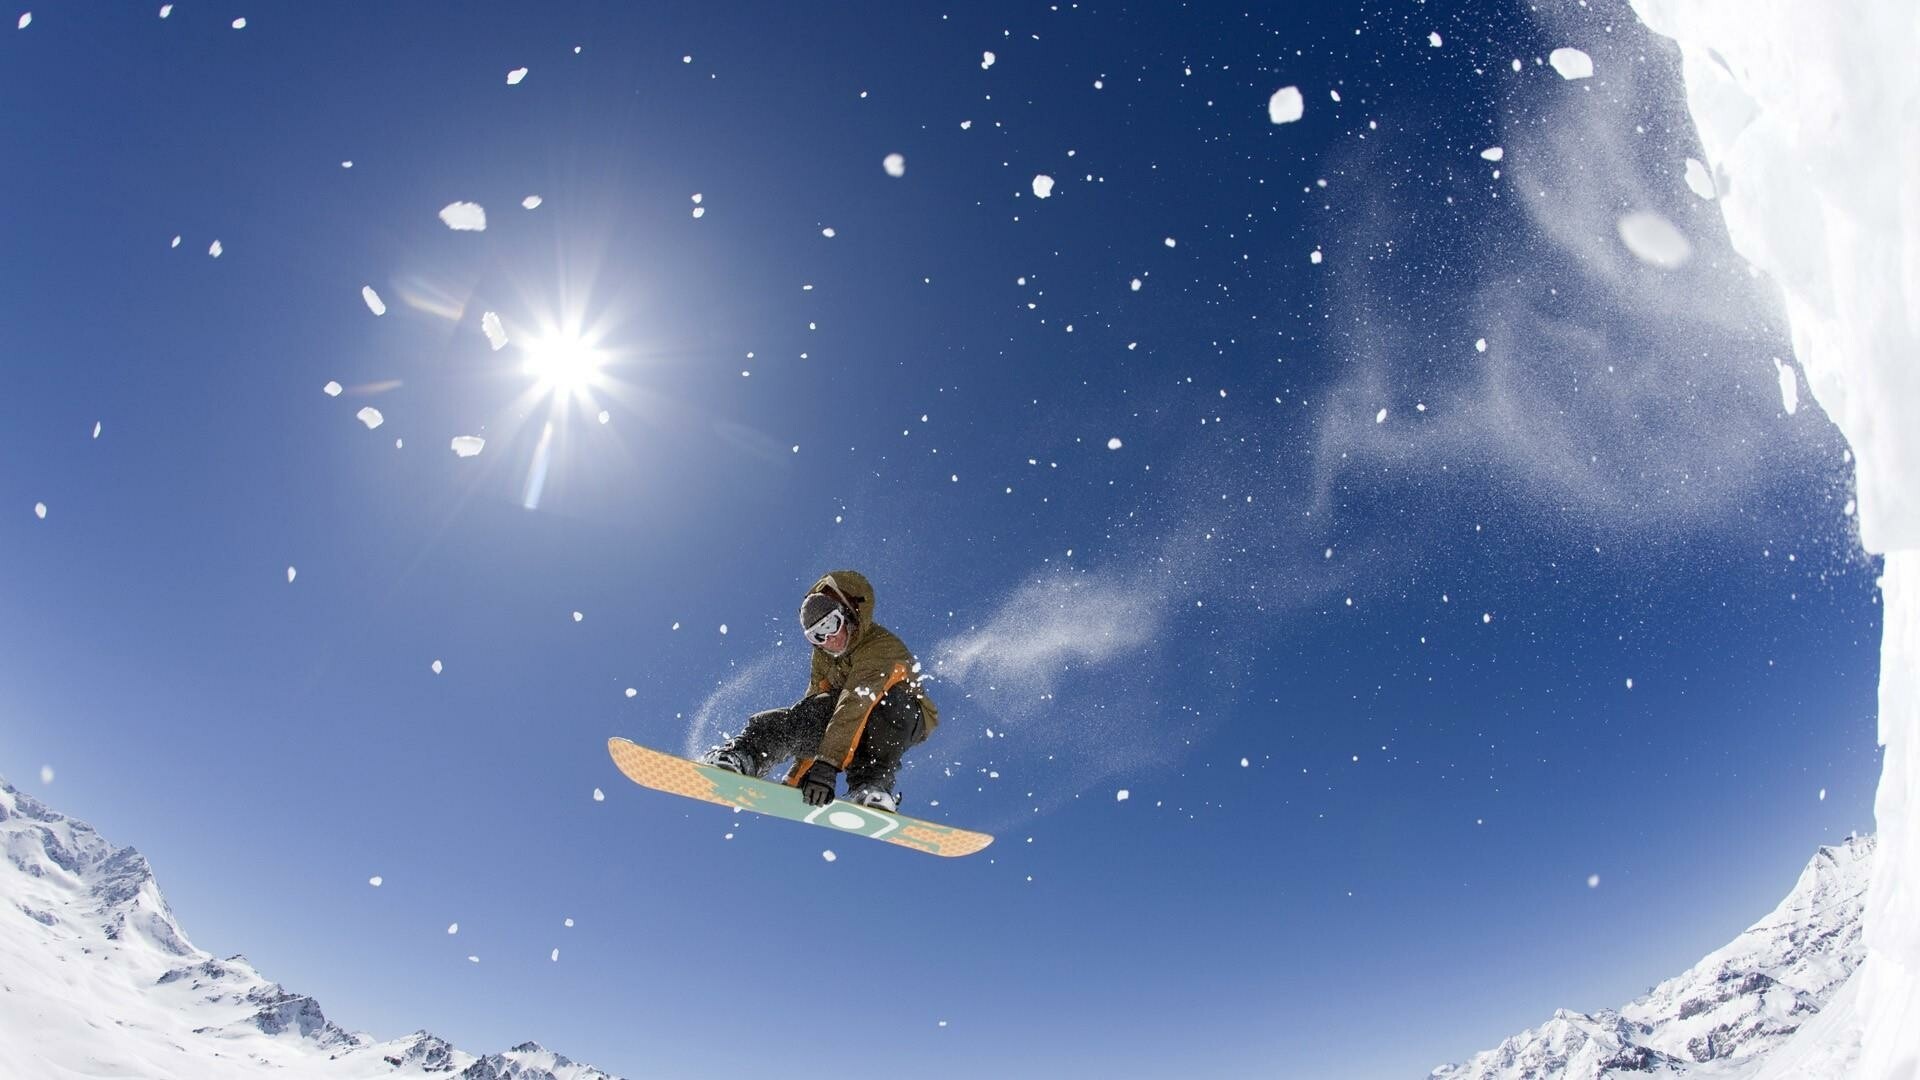 Snowboarding: Big air winter sport discipline, Extreme aerial tricks and acrobatics performance. 1920x1080 Full HD Wallpaper.